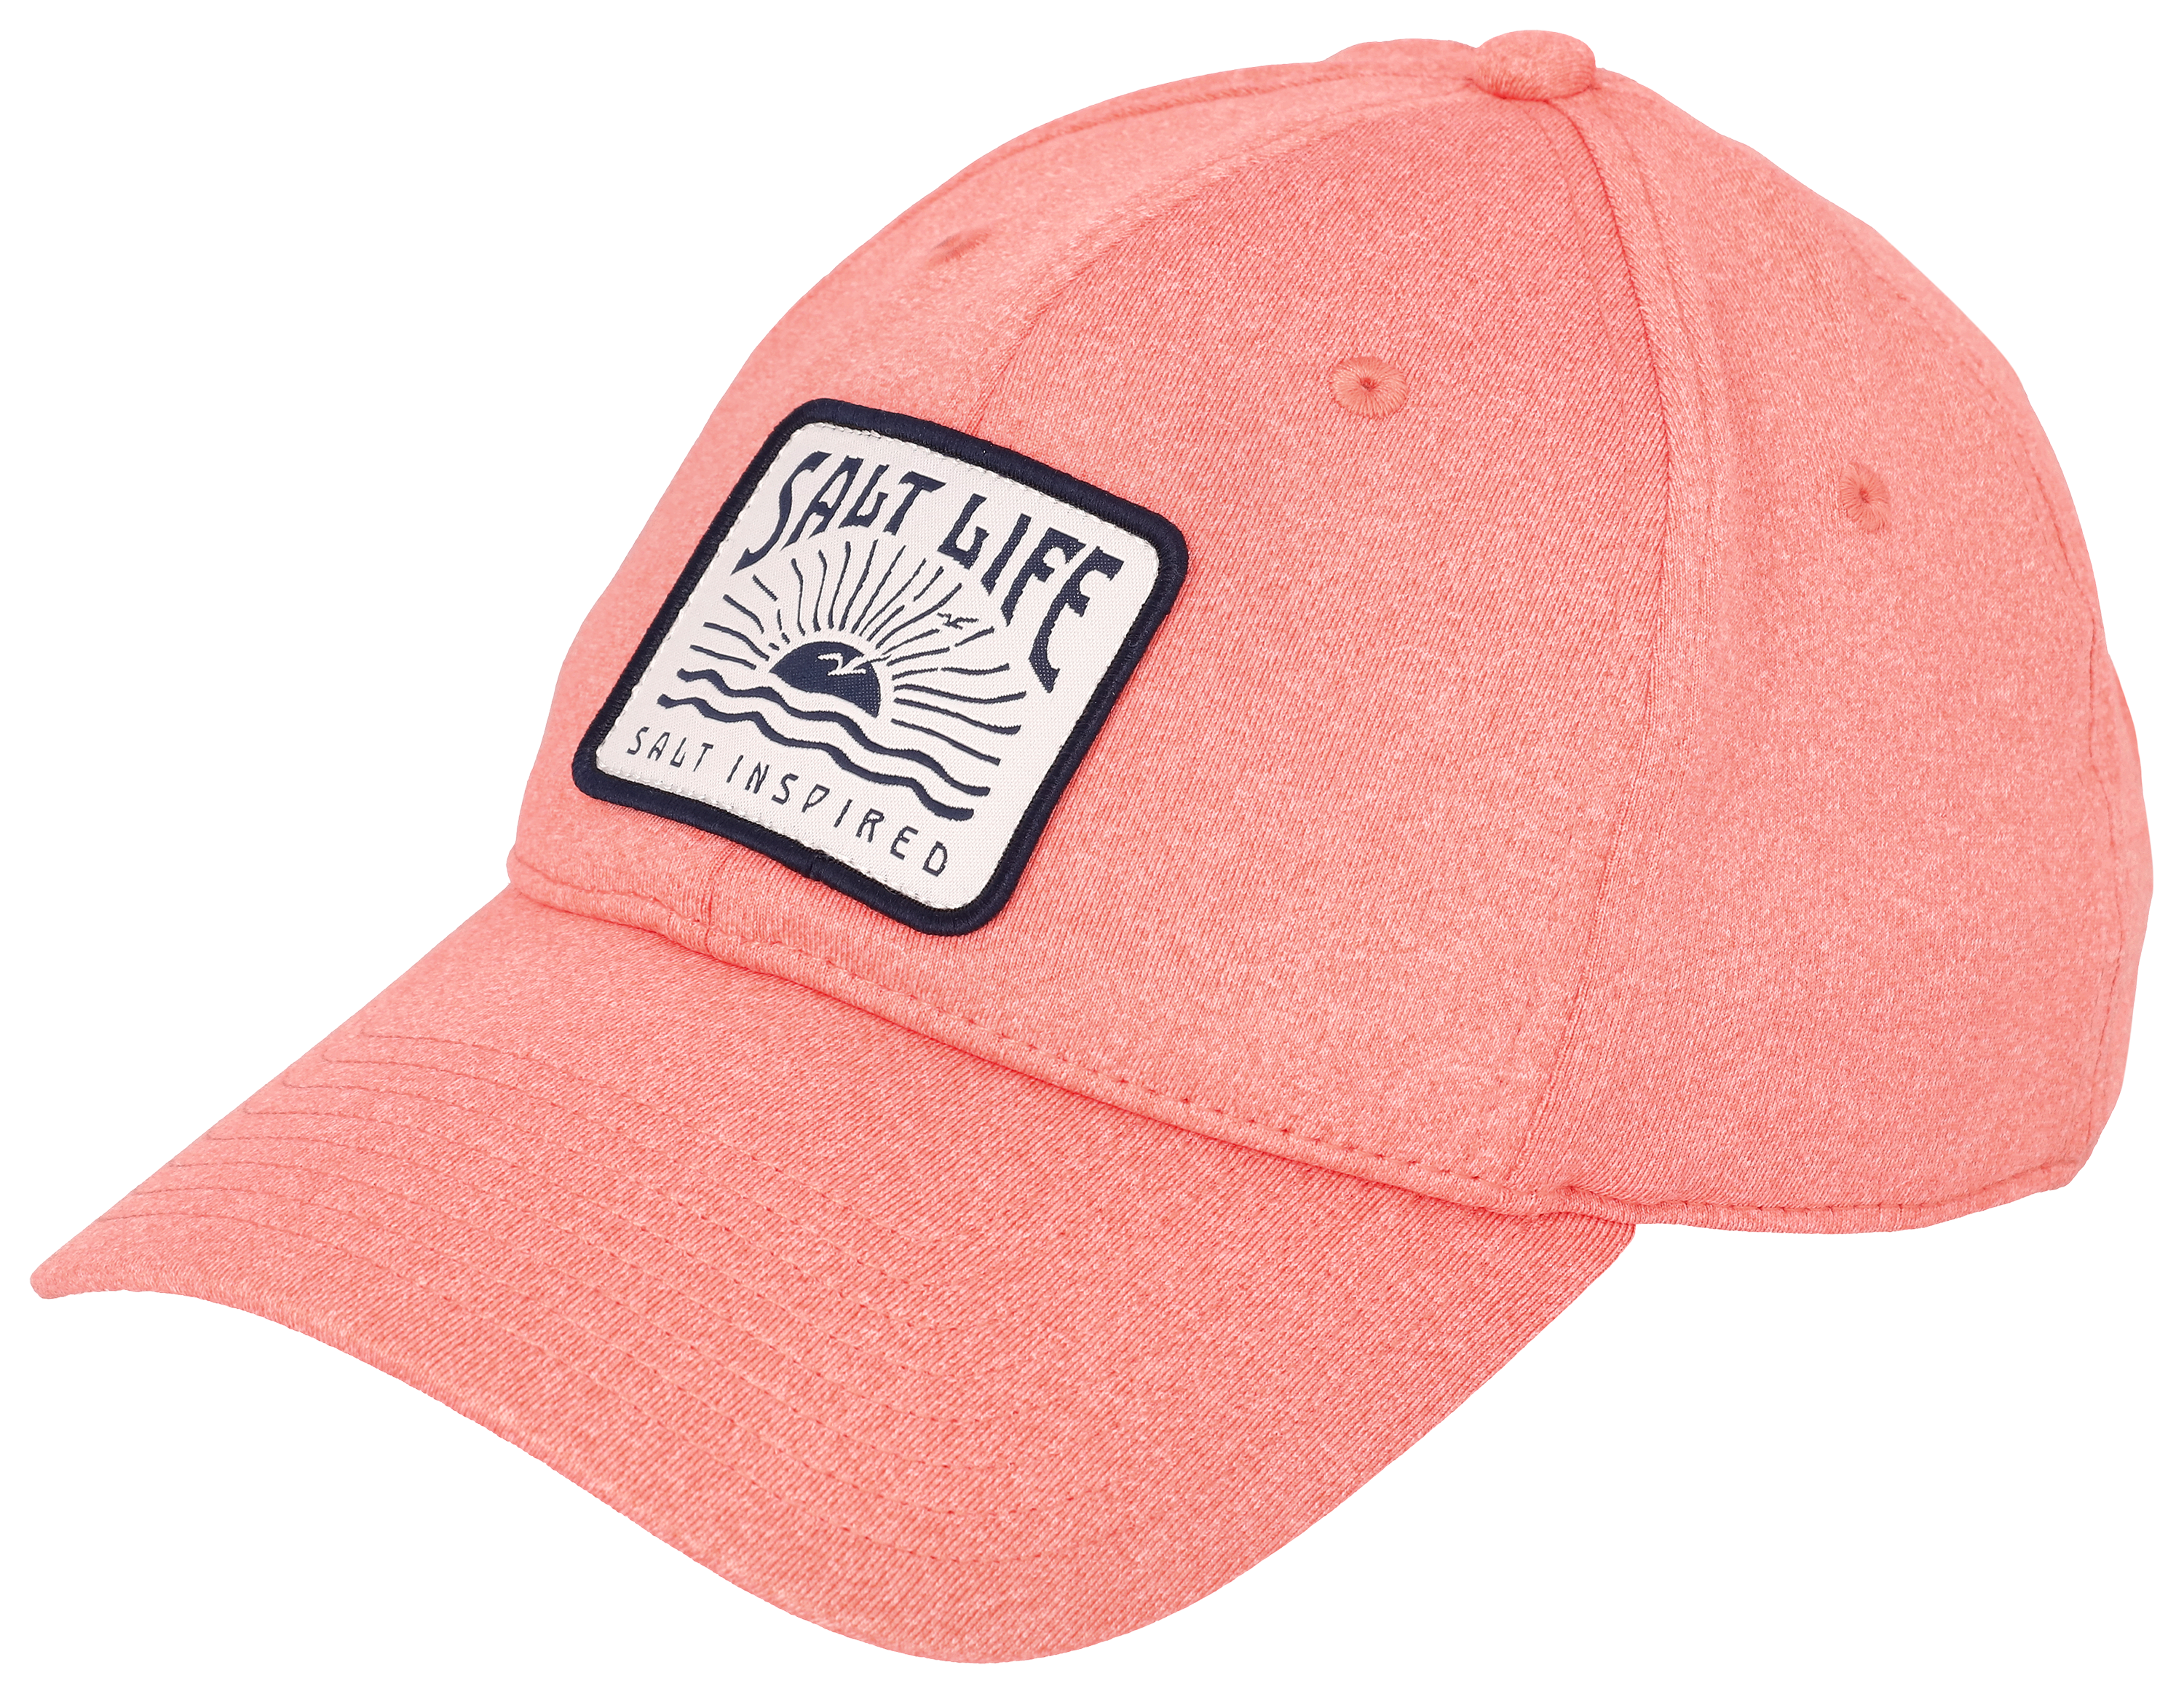 Salt Life Inspired Buckle-Back Cap for Ladies